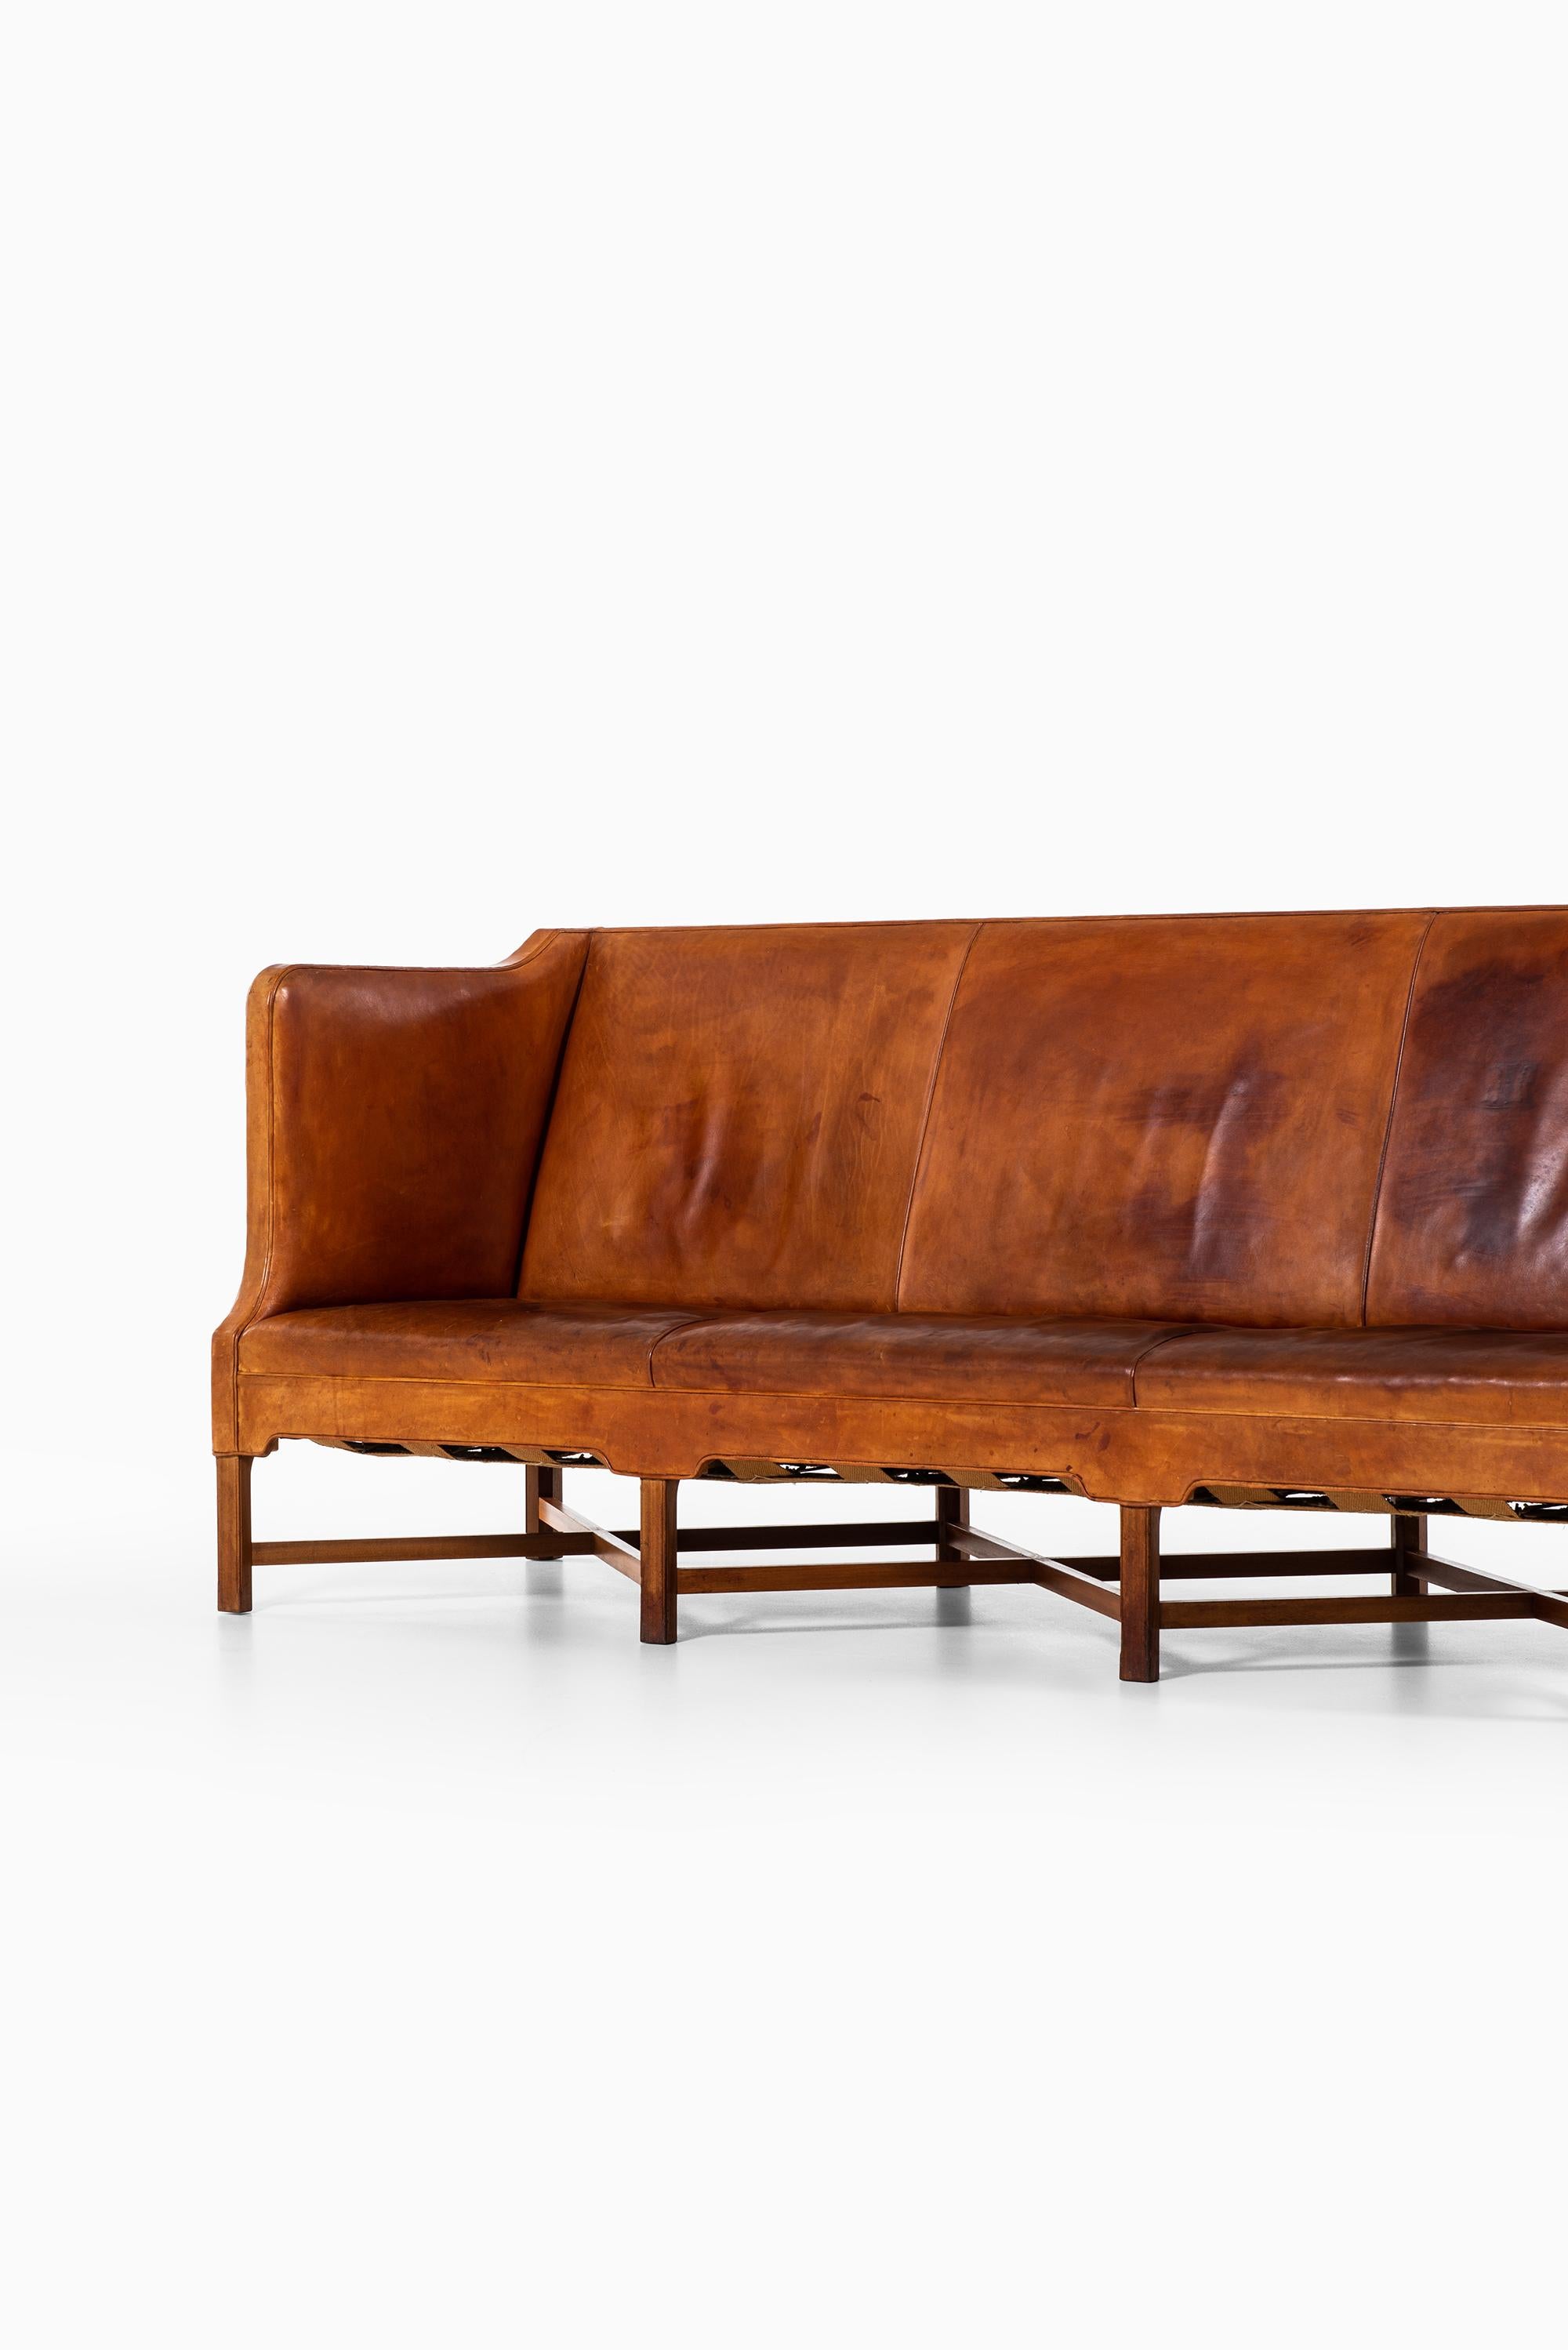 Leather Kaare Klint Sofa Model No 4118 Produced by Rud. Rasmussen in Denmark